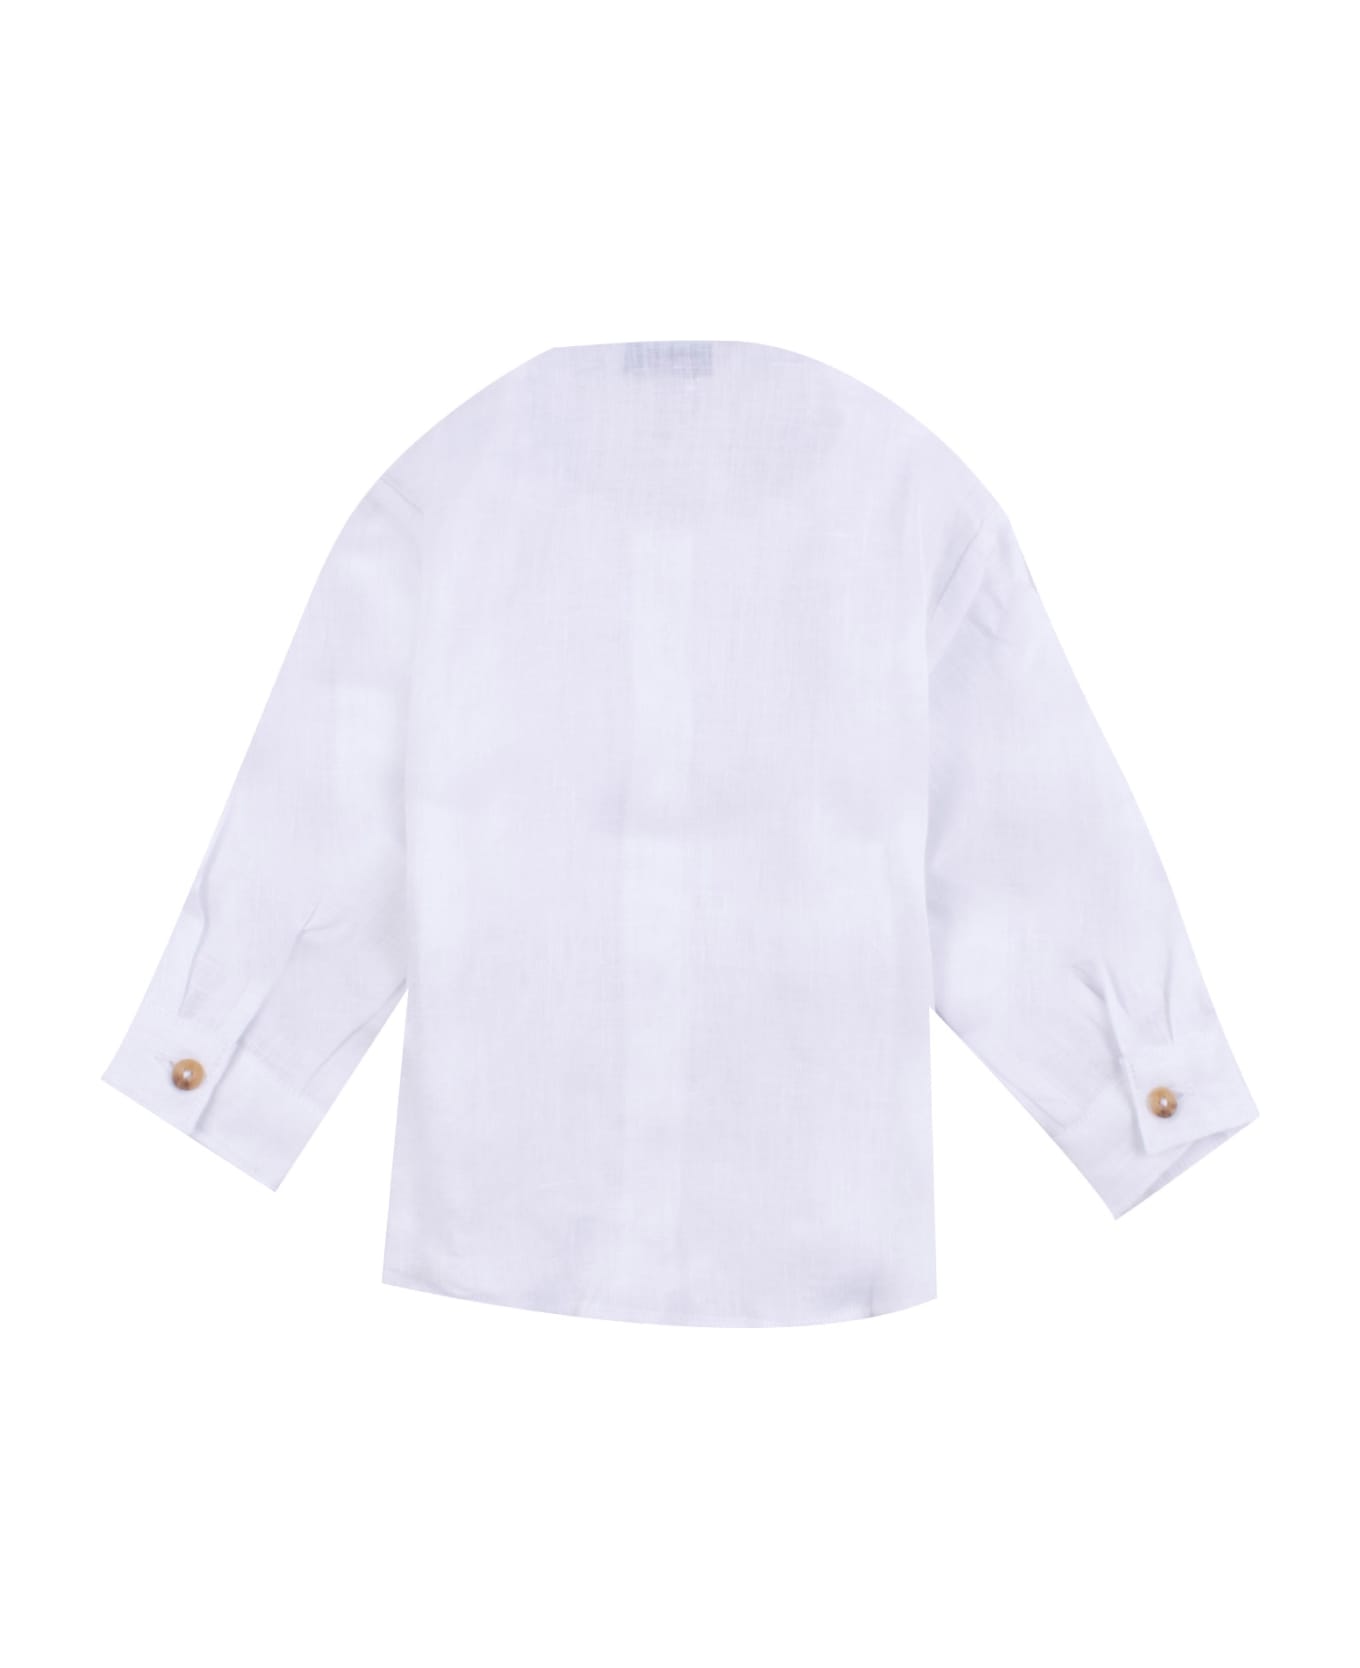 Manuel Ritz Linen Shirt - White シャツ